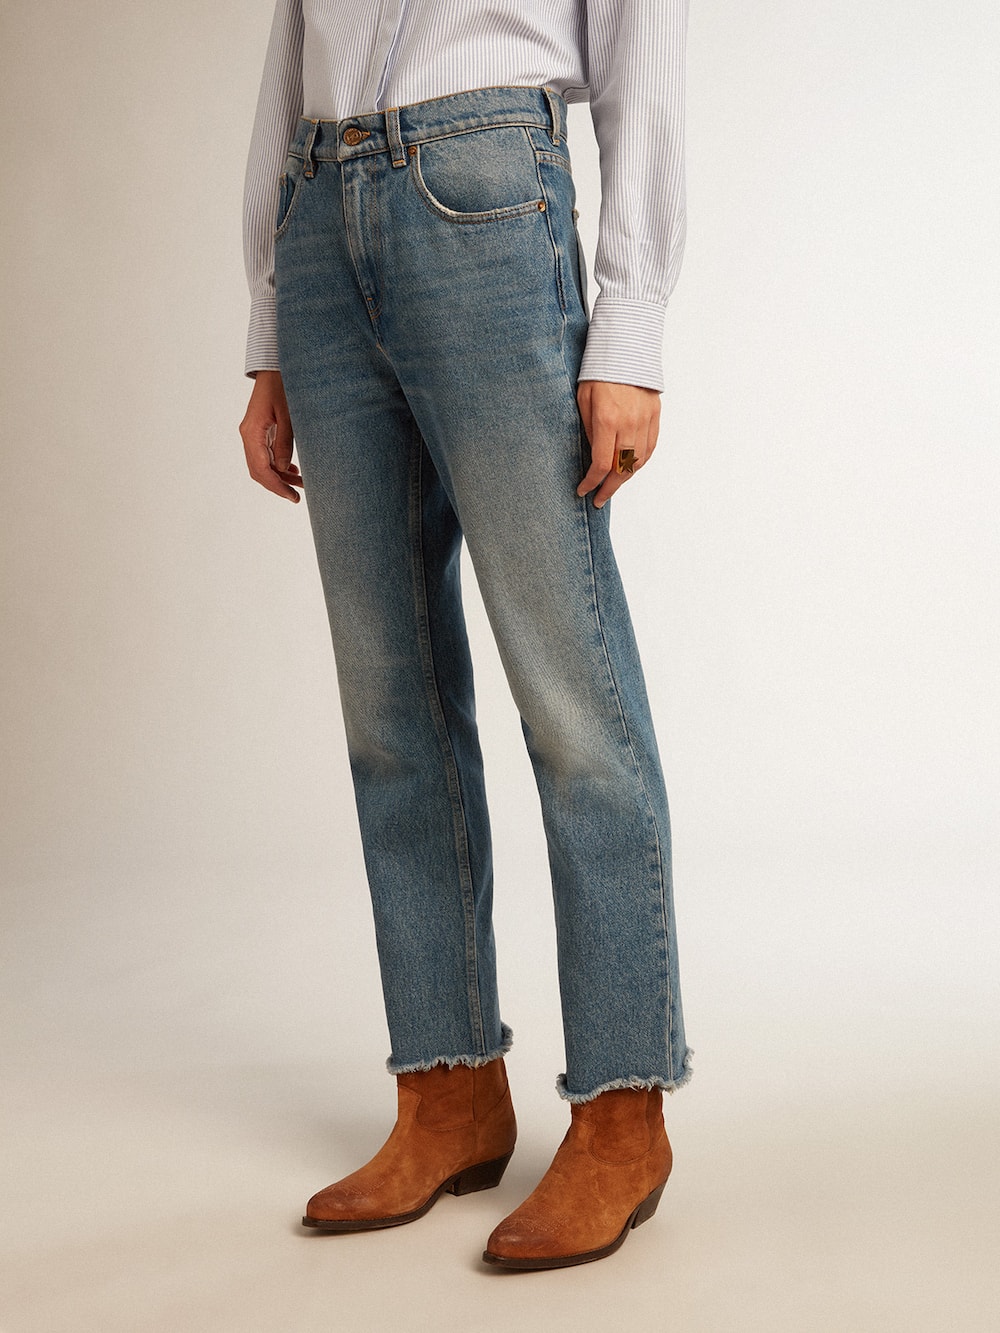 Golden Goose - Calça jeans cropped flare feminina com lavagem média in 